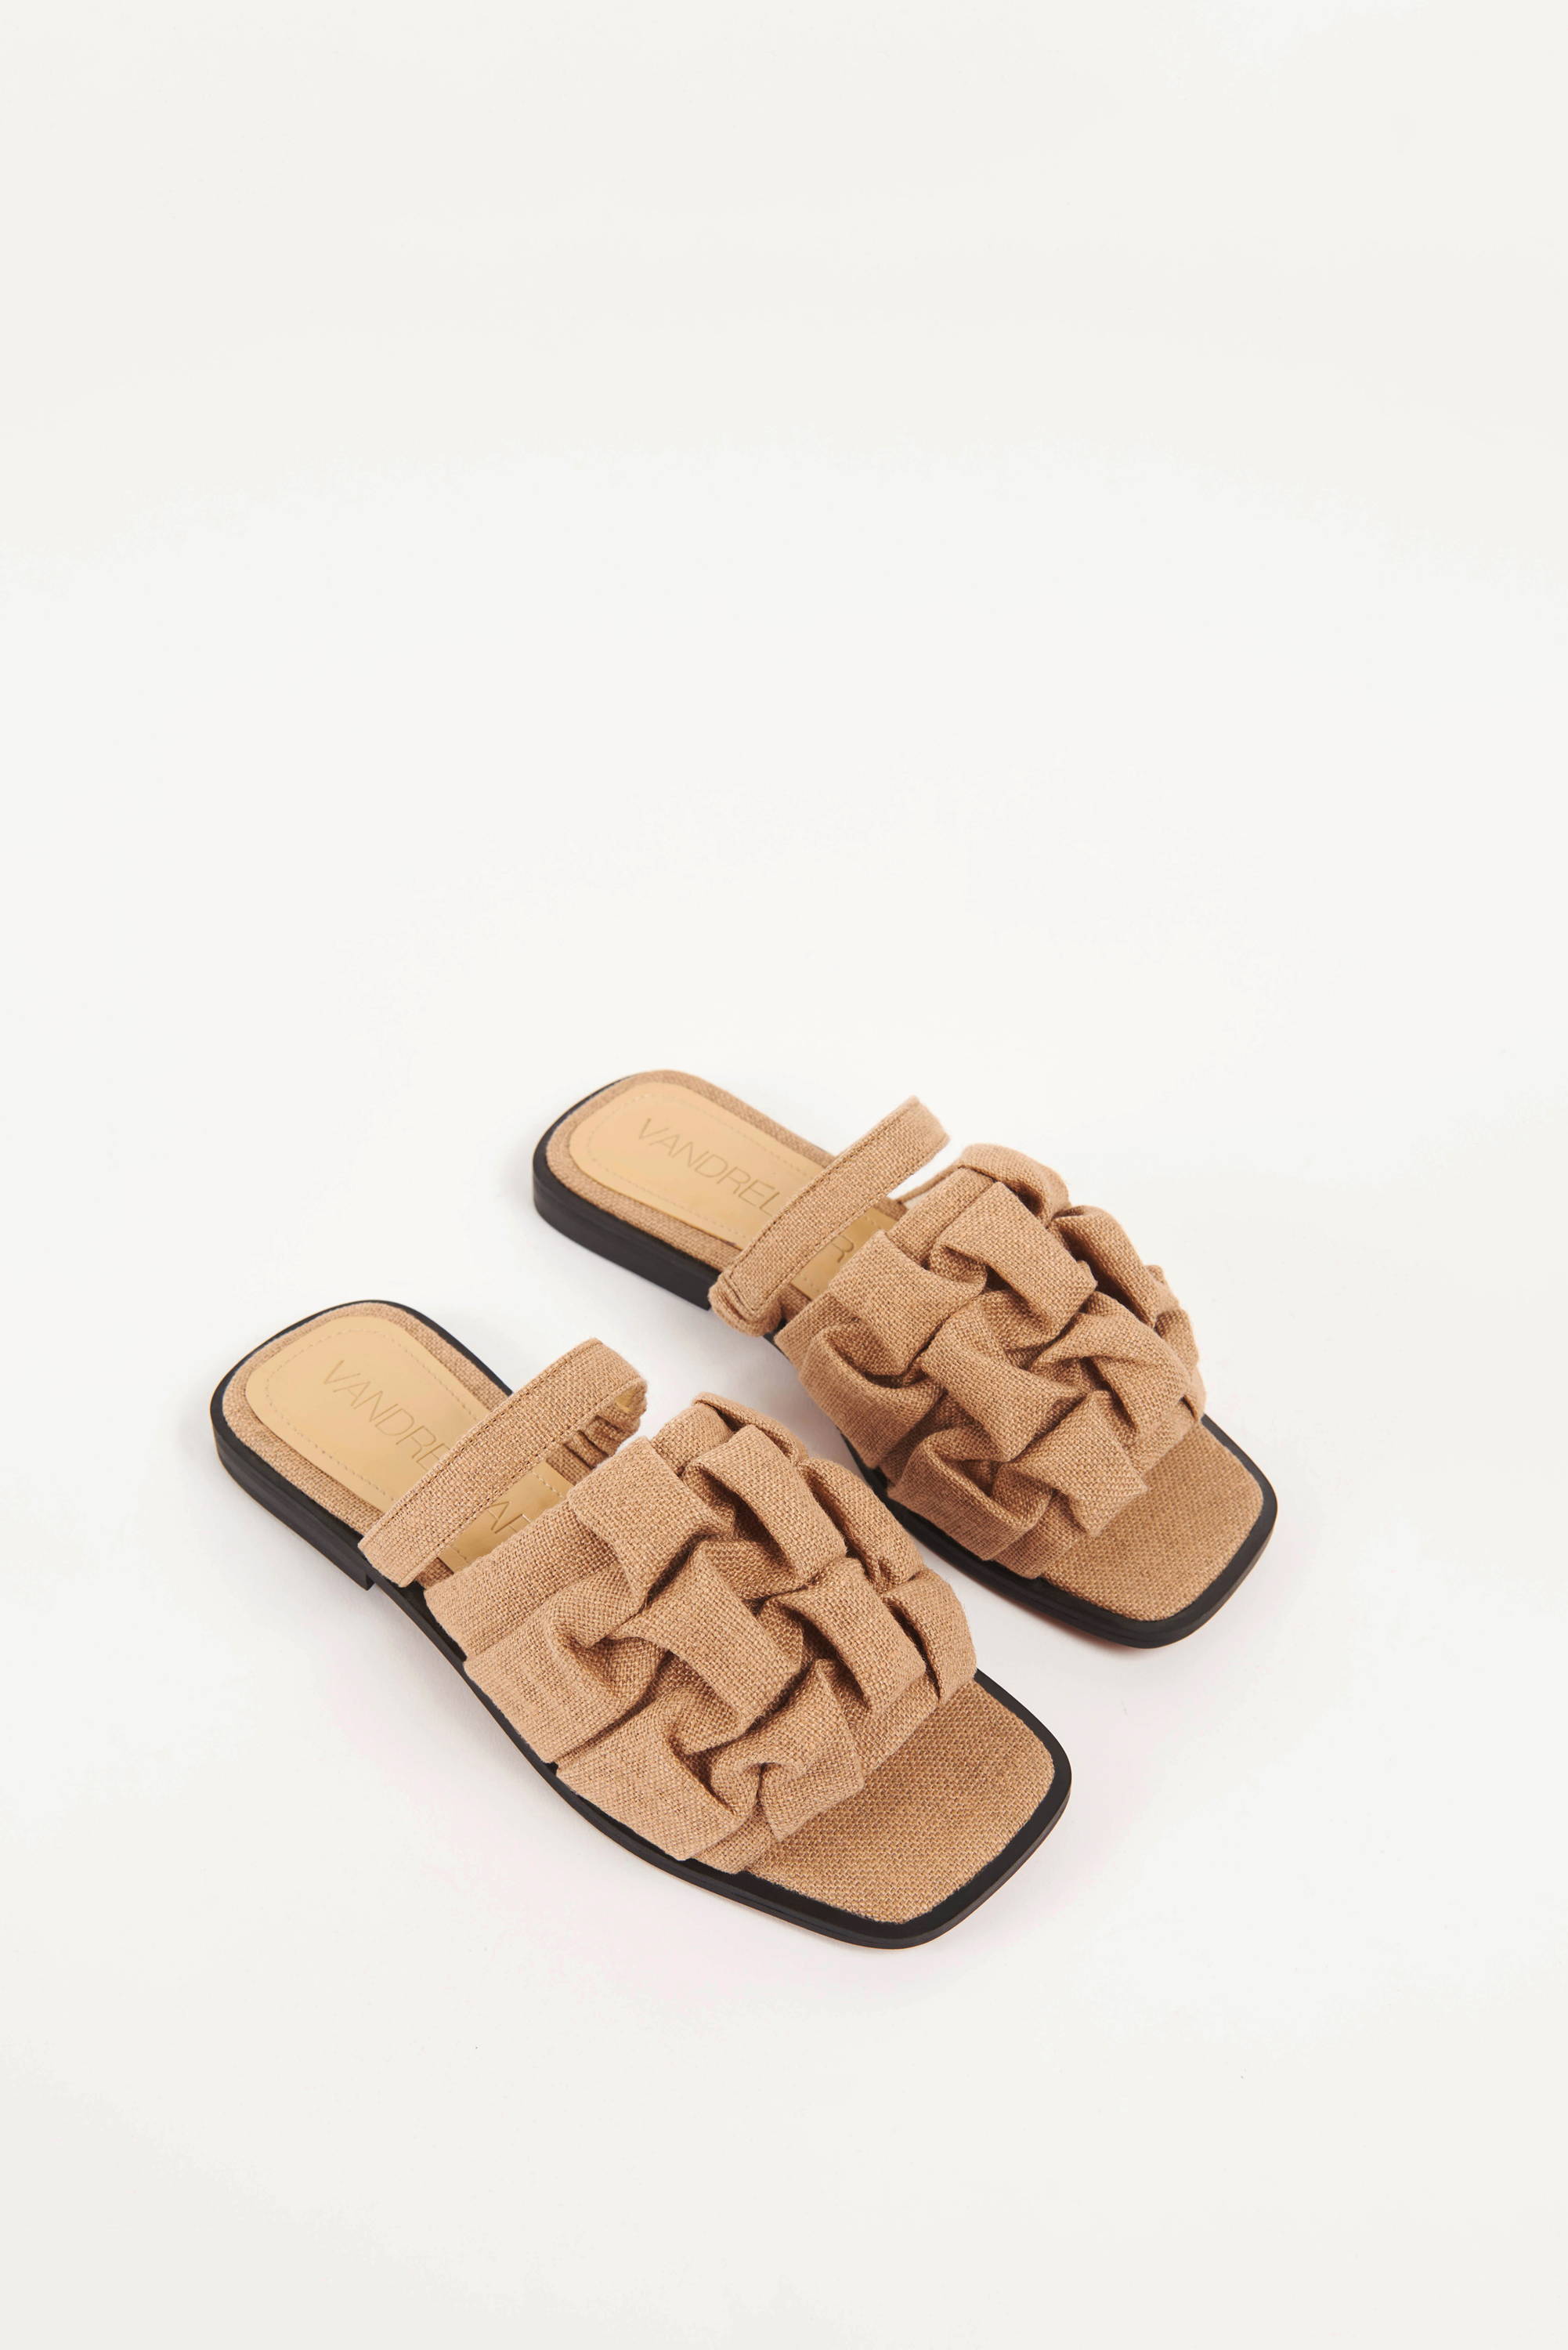 Vandrelaar vegan Simone sandal in sandy beige linen featuring canadian smocking detailing and a square toe